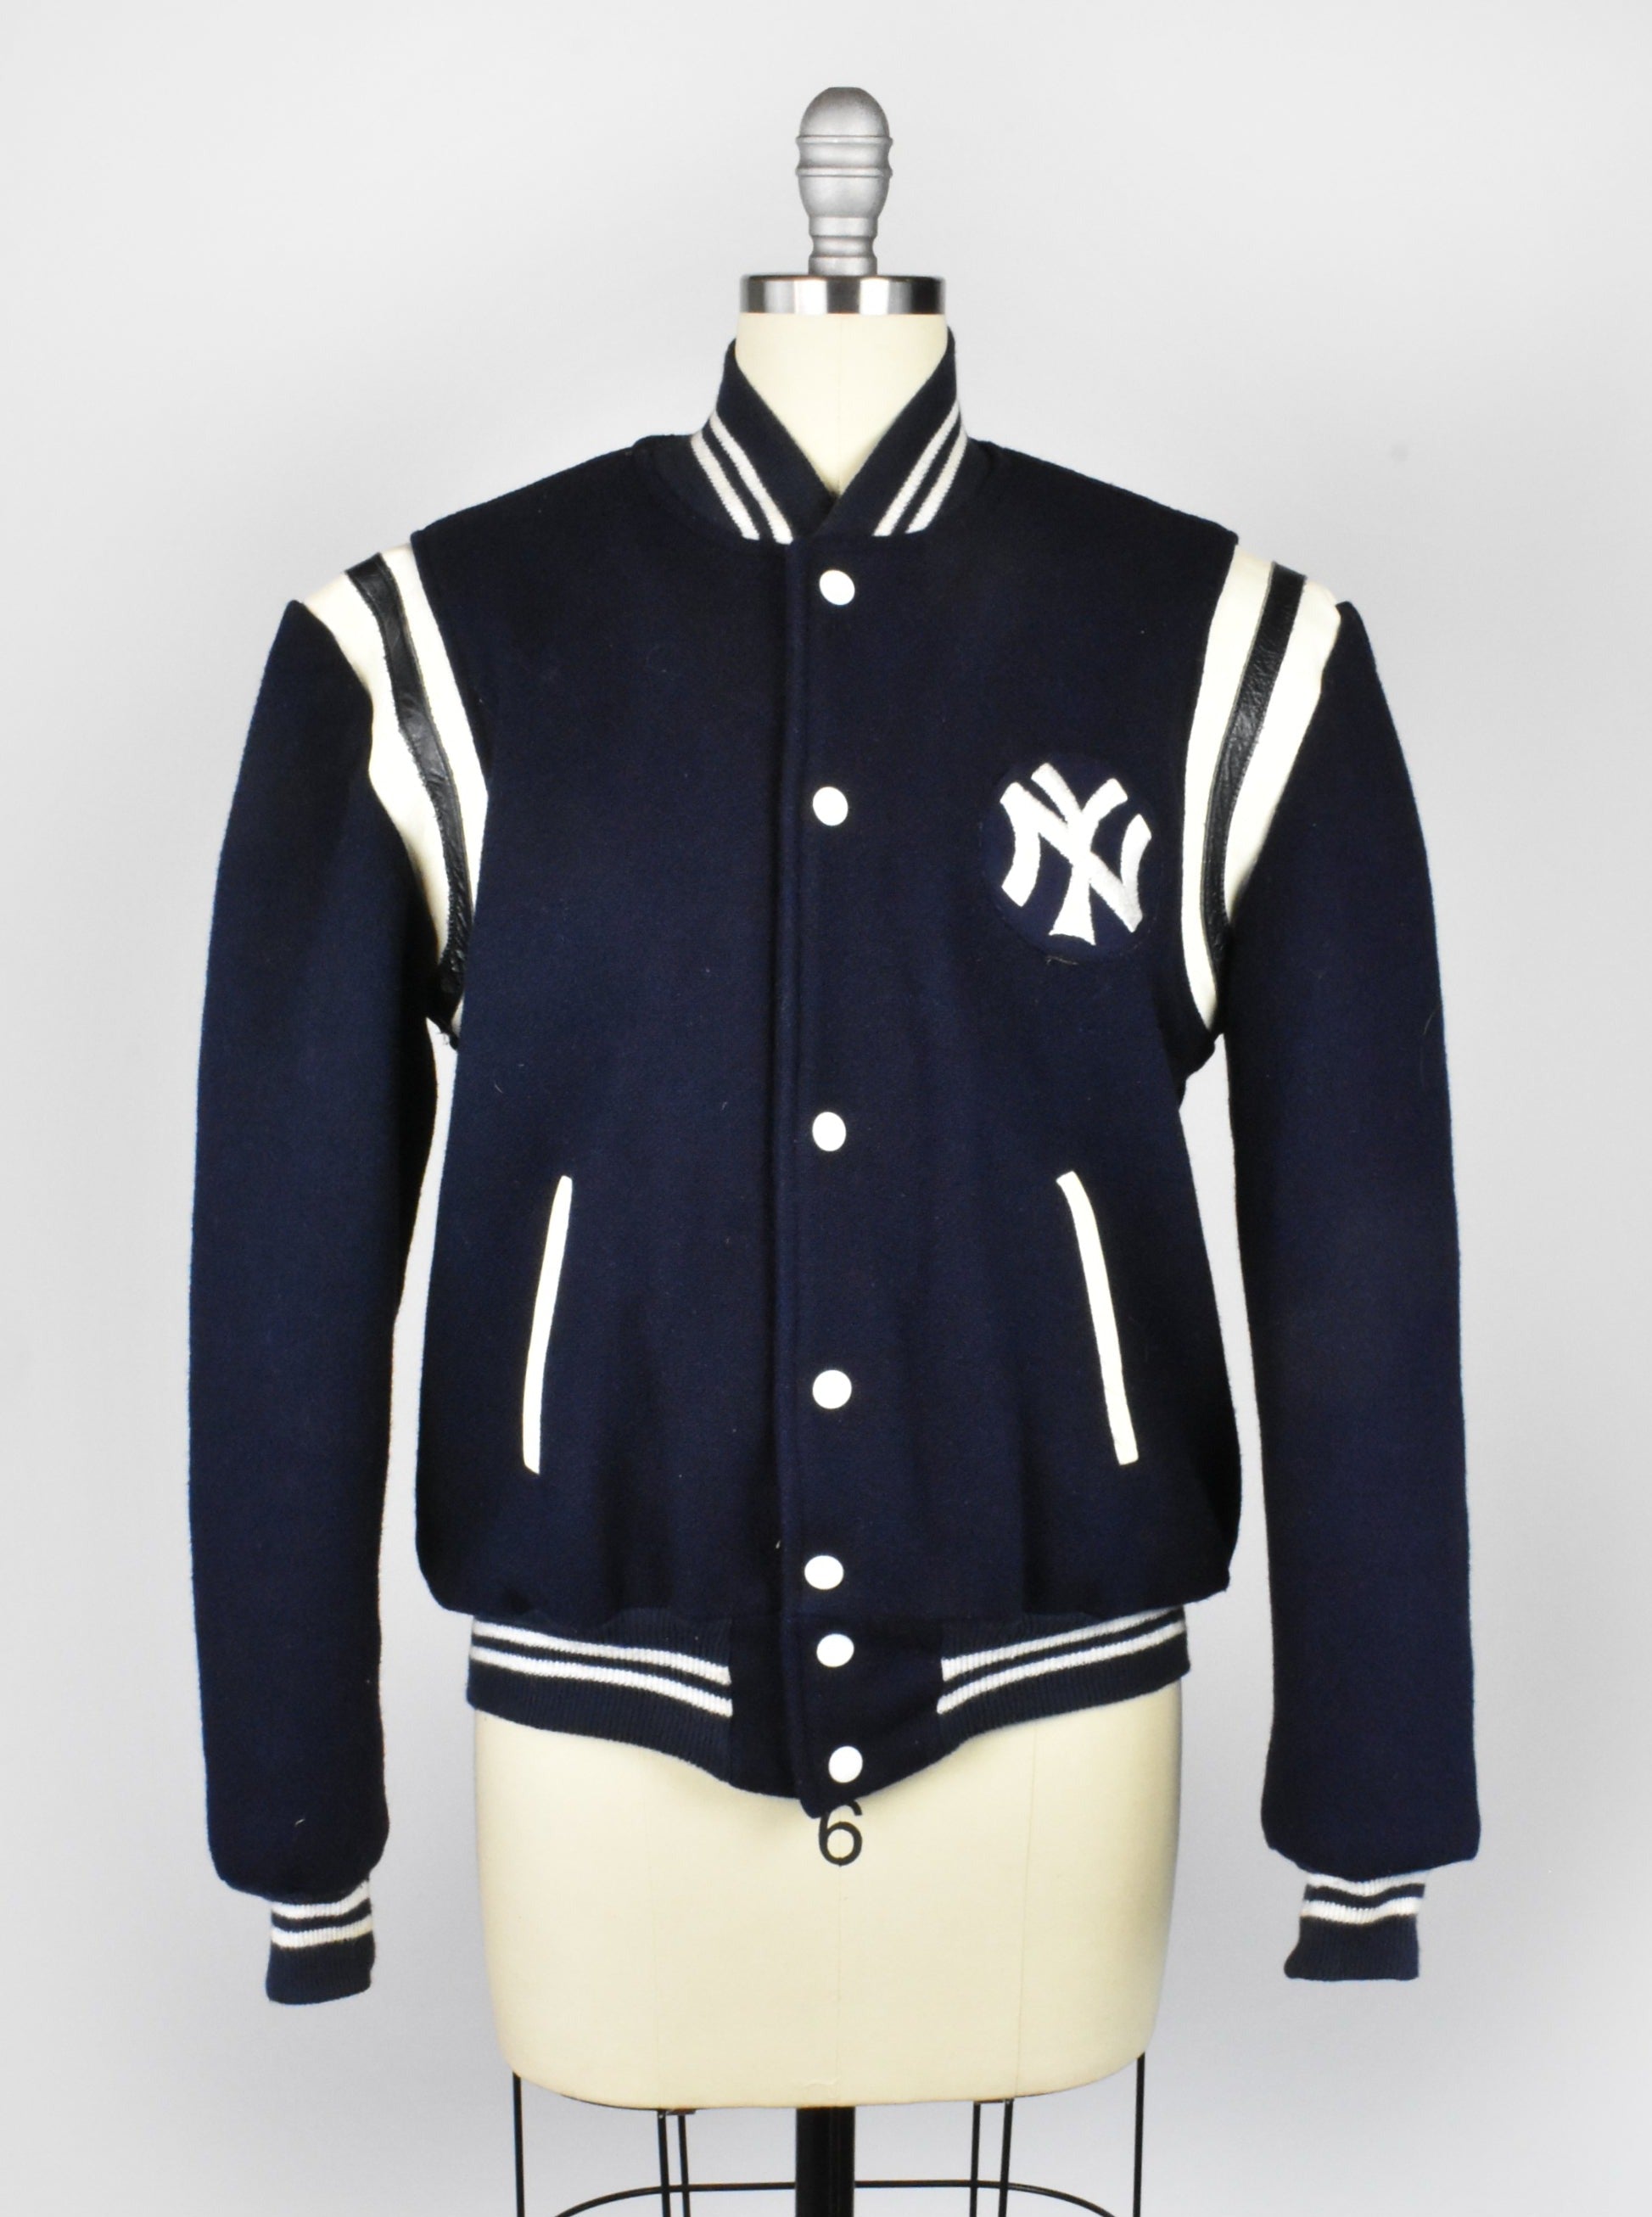 Yankees Athlete Letterman Jacket in Midnight Blue - Glue Store